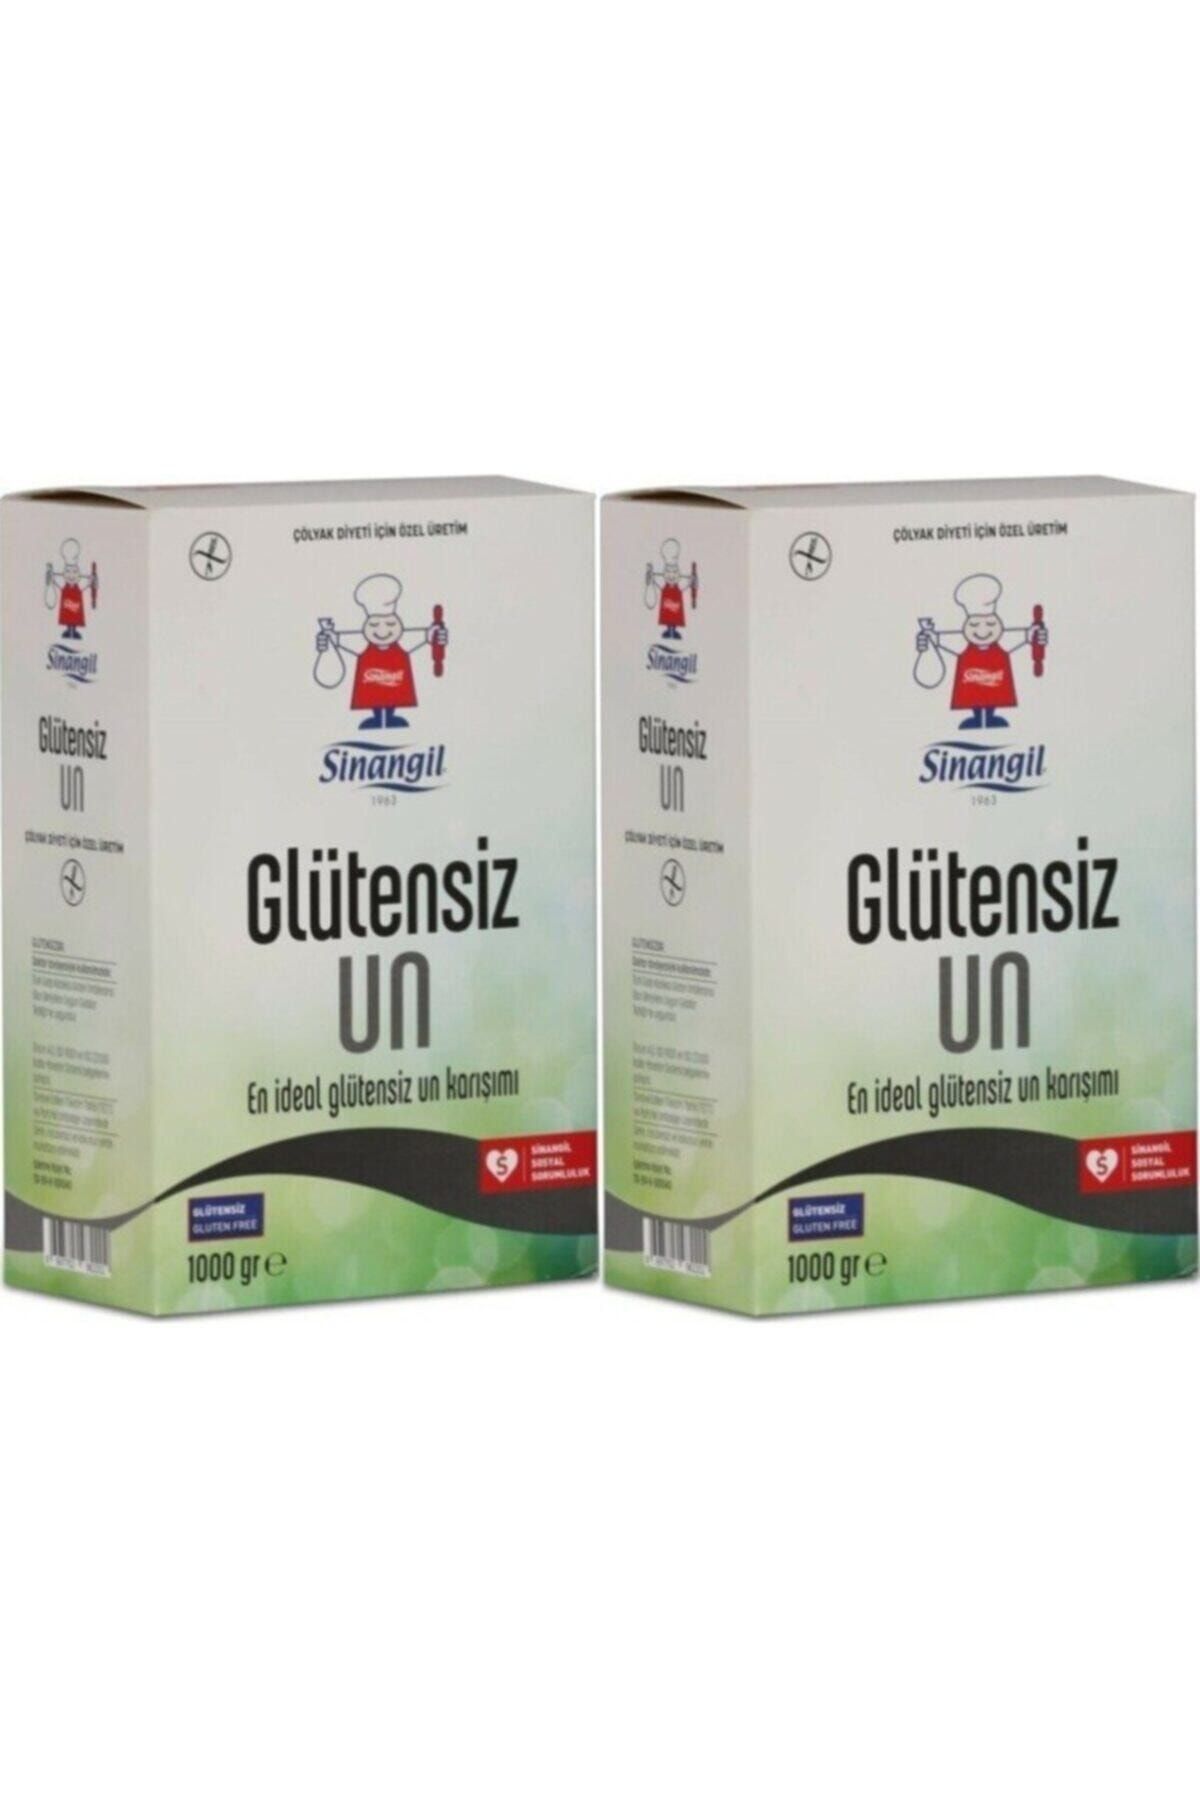 Sinangil Glutensiz Un 1000 gr 2 Paket